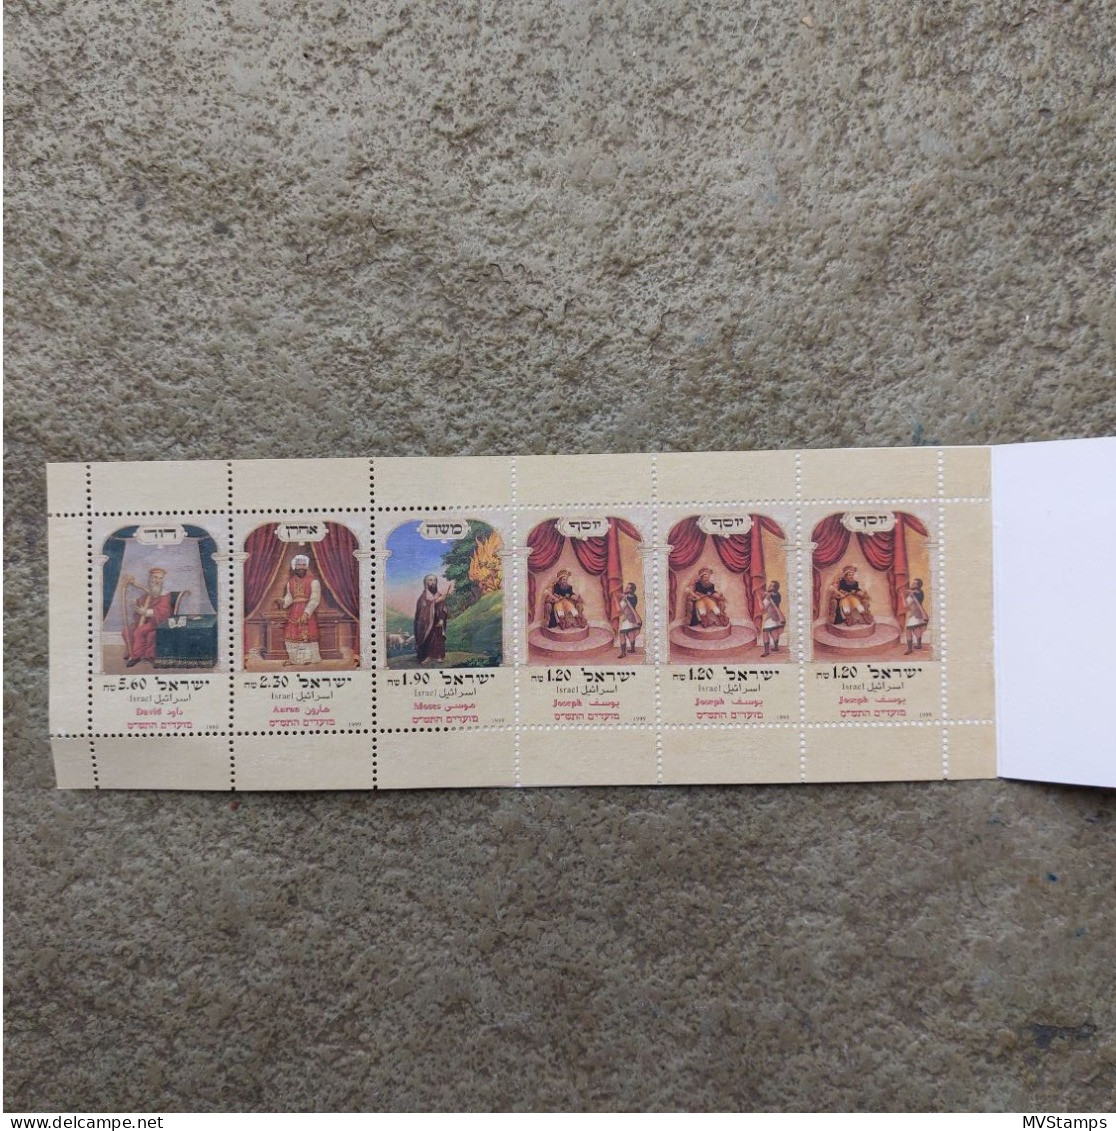 Israel 1999 Booklet Festival Stamps (Michel MH 34) Nice MNH - Postzegelboekjes